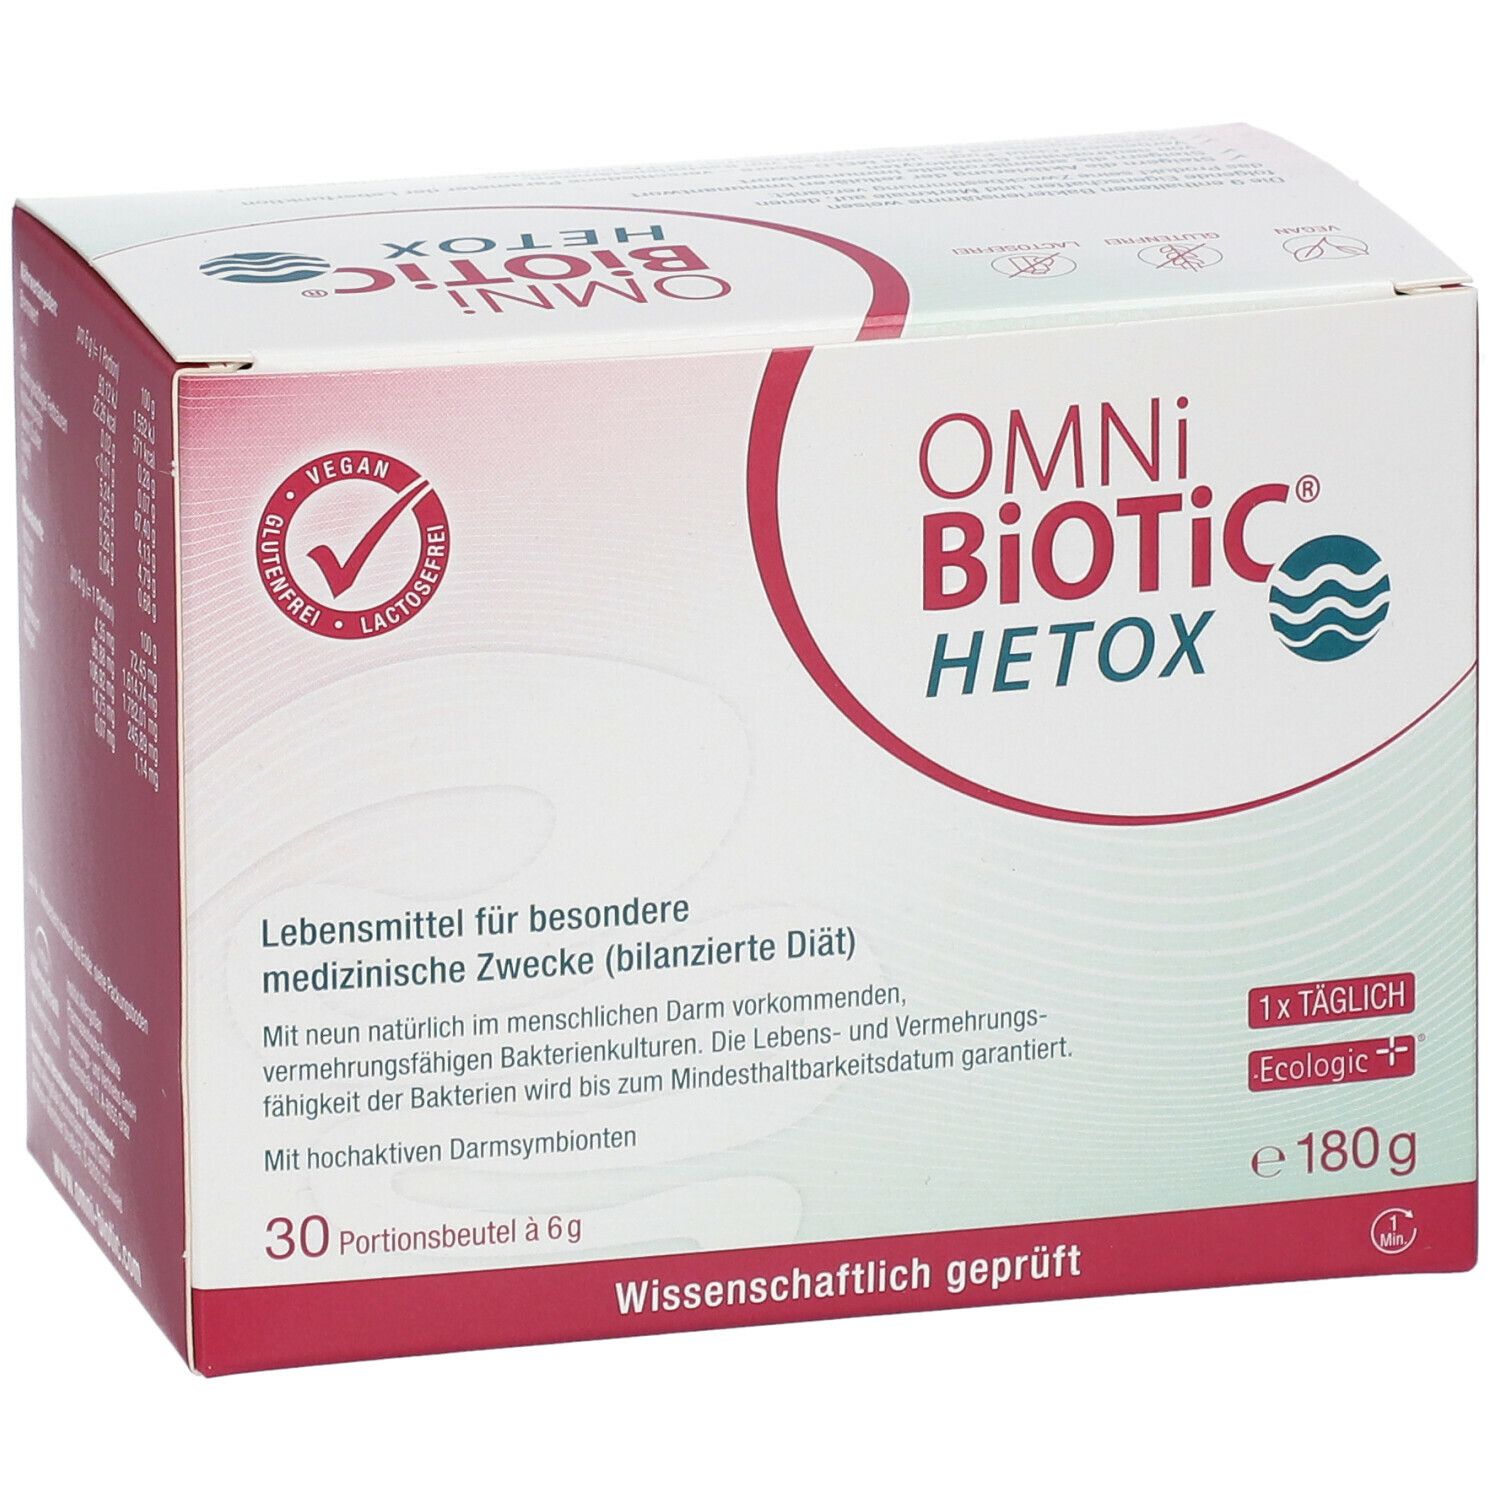 OMNi BiOTiC® HETOX